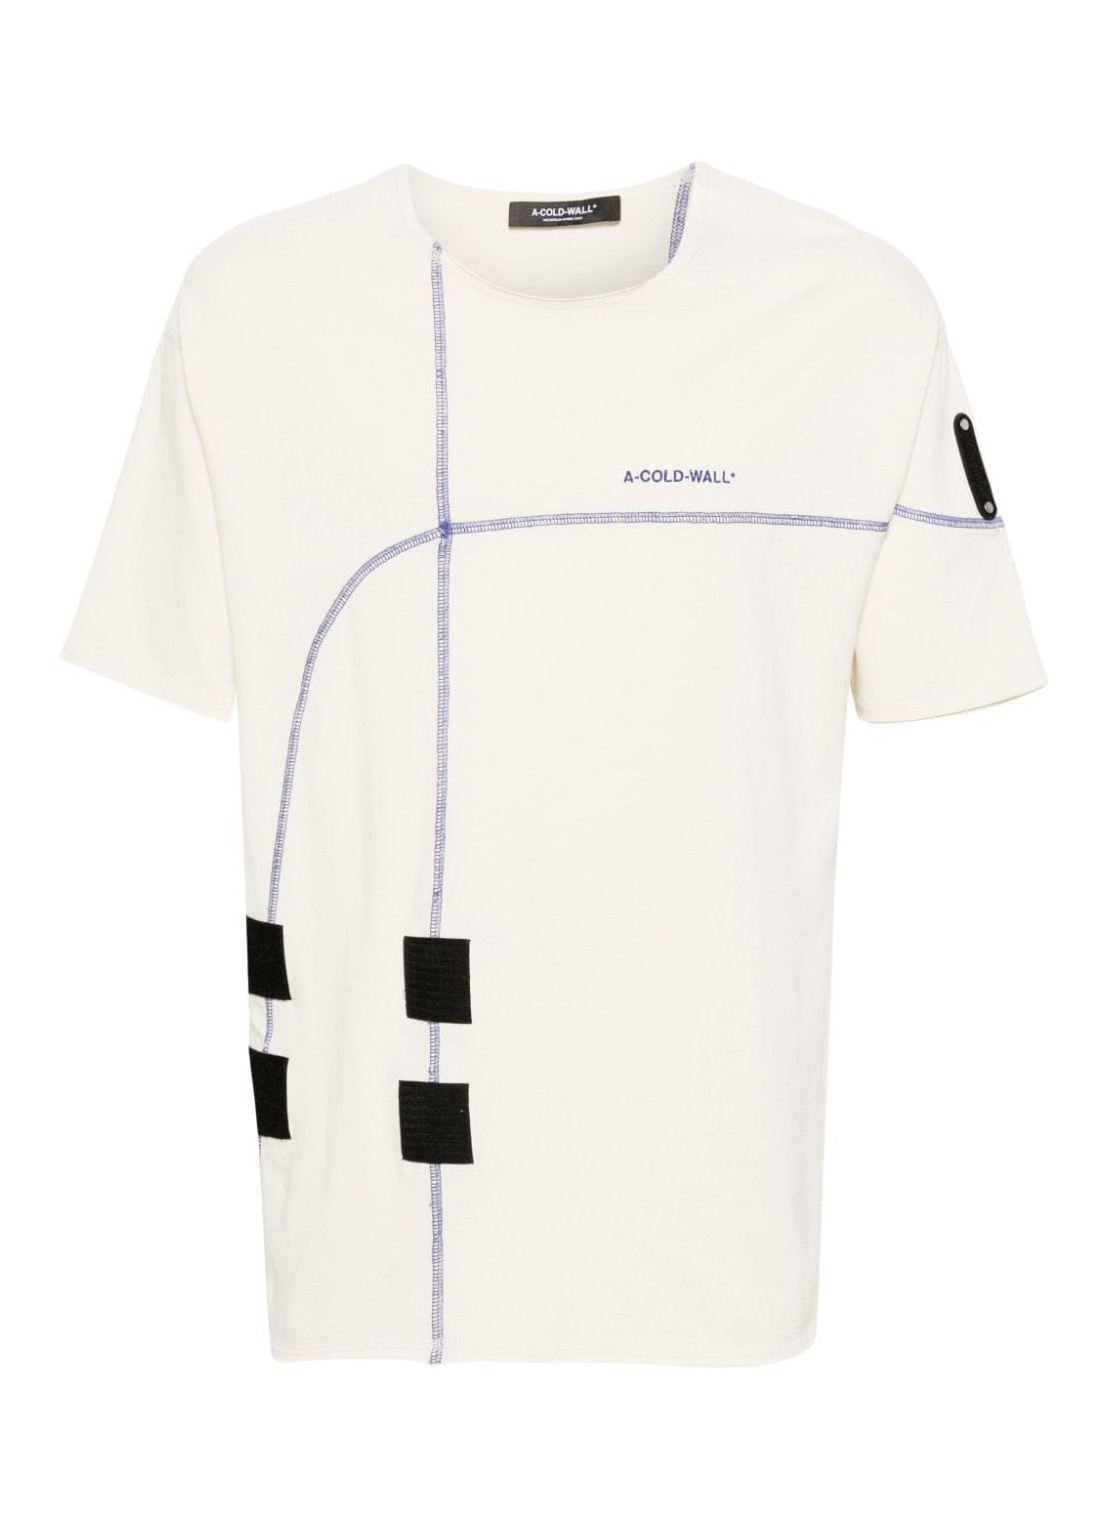 Camiseta a-cold-wall* t-shirt man intersect t-shirt acwmts179 bone bone talla XL
 